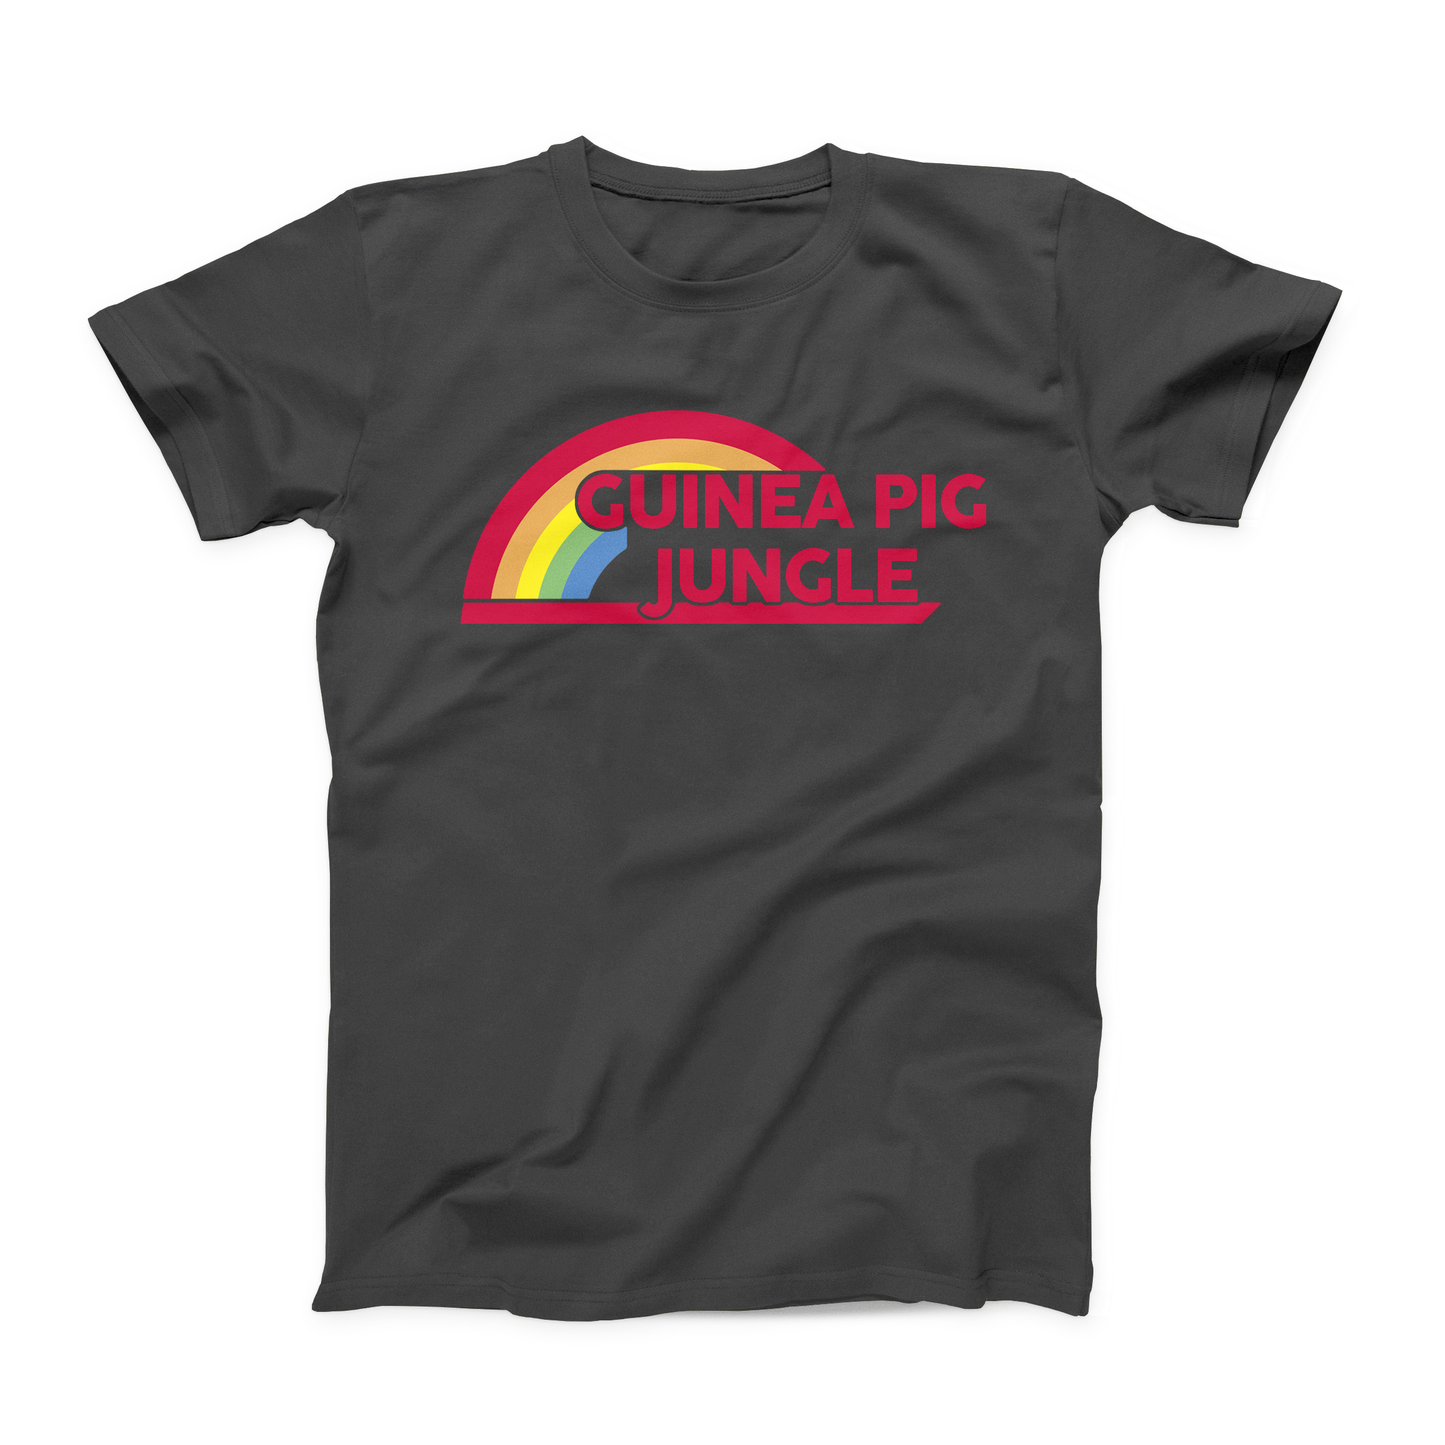 Guinea Pig Rainbow Adult T-Shirt : Guinea Pig Jungle Shirt: Unisex